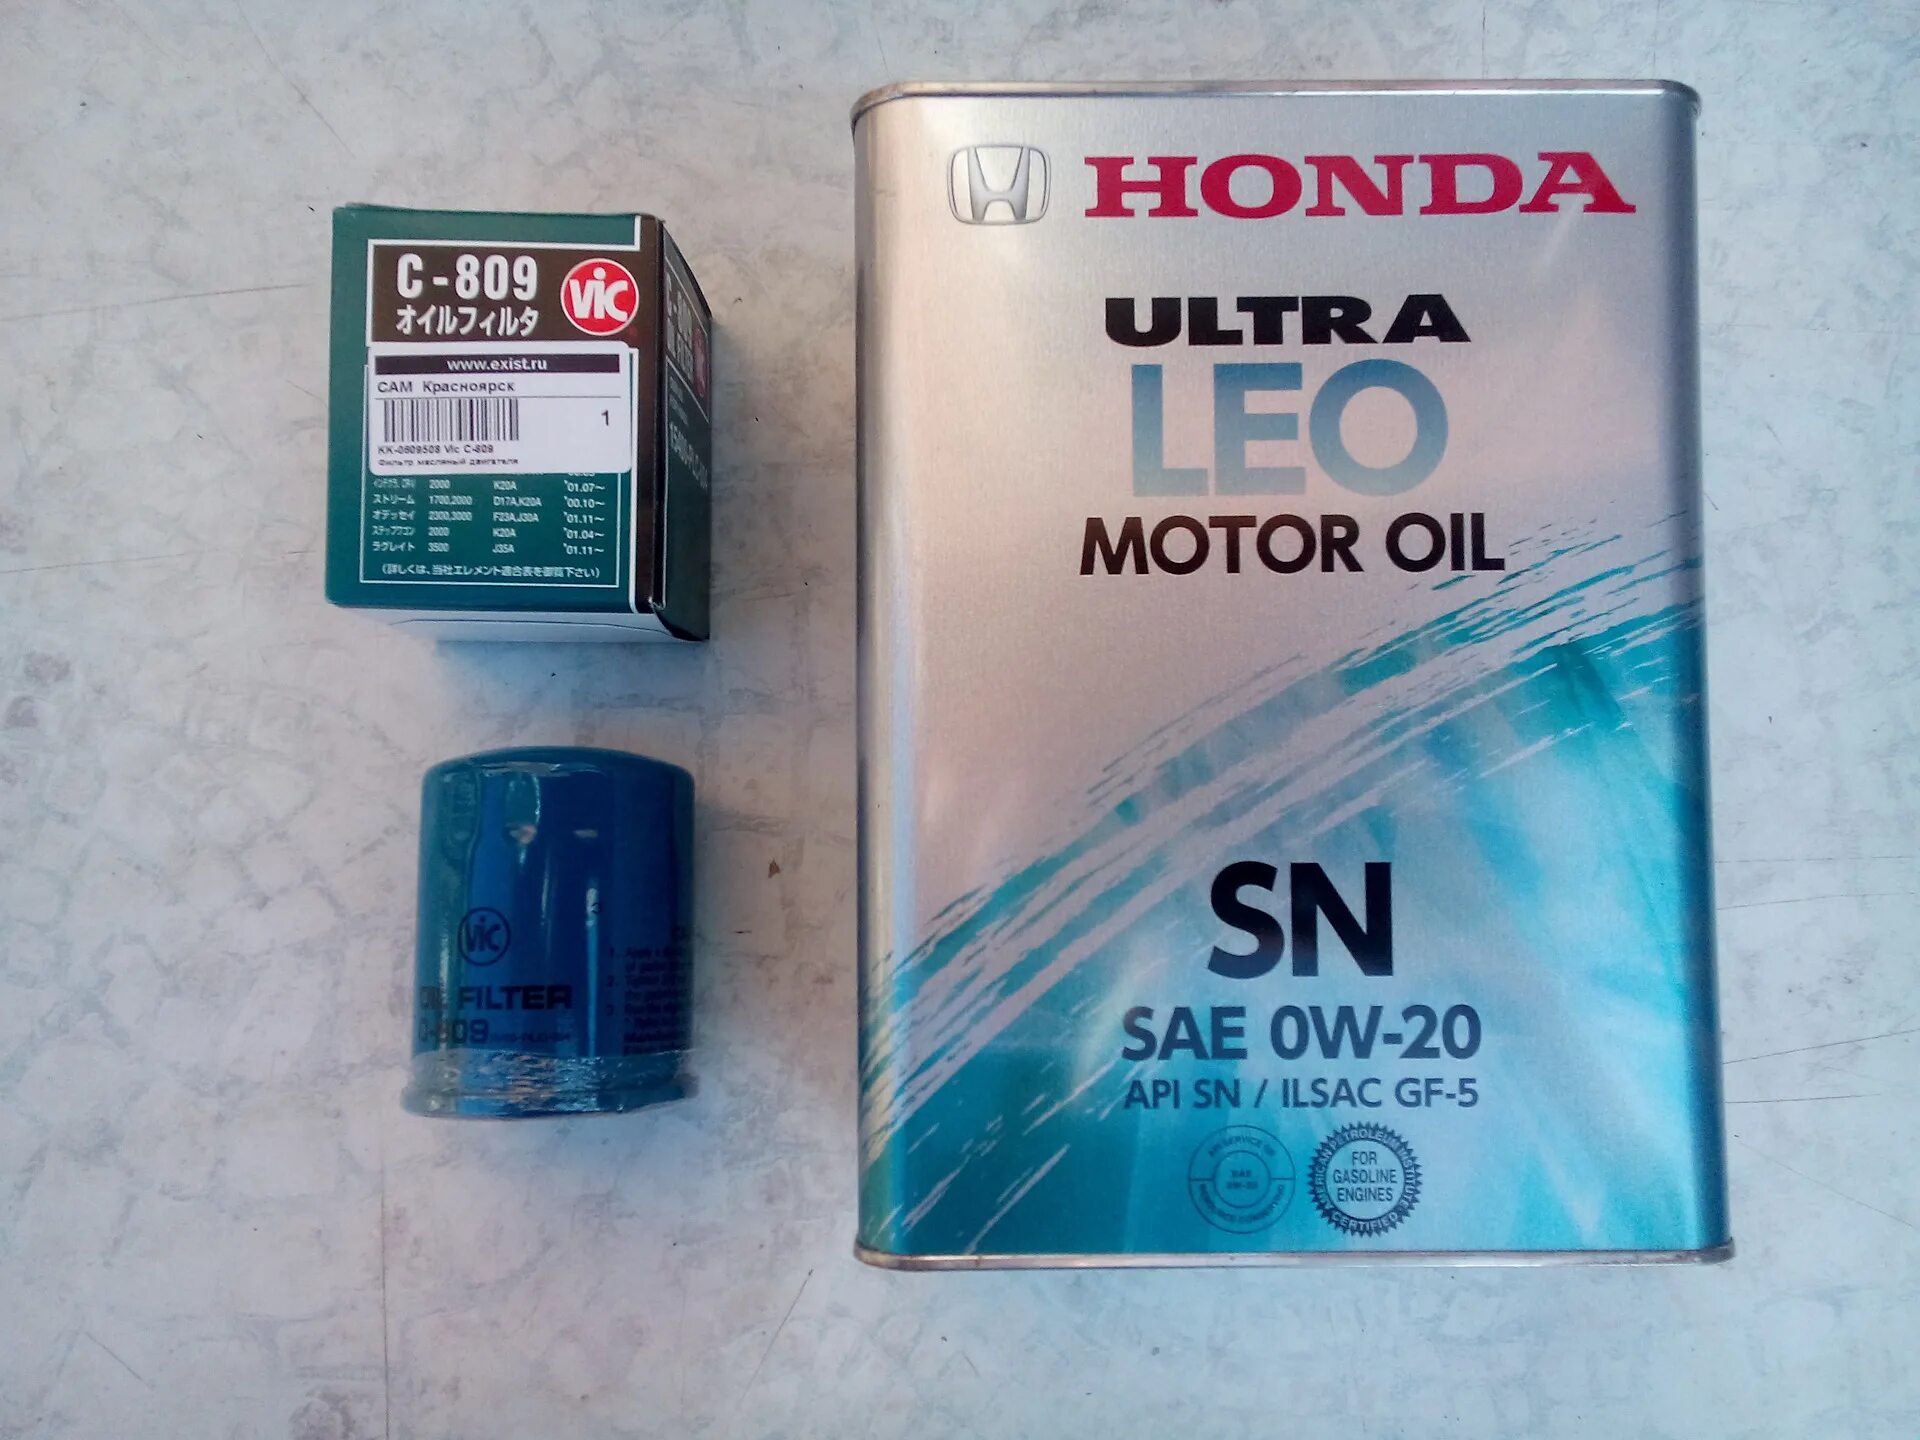 Хонда степвагон масло в двигатель. Масло Honda Ultra Leo 0w20. Хонда Степвагон масляный фильтр. Масляный фильтр Хонда Степвагон 2016. Масляный фильтр Хонда Степвагон в20в.